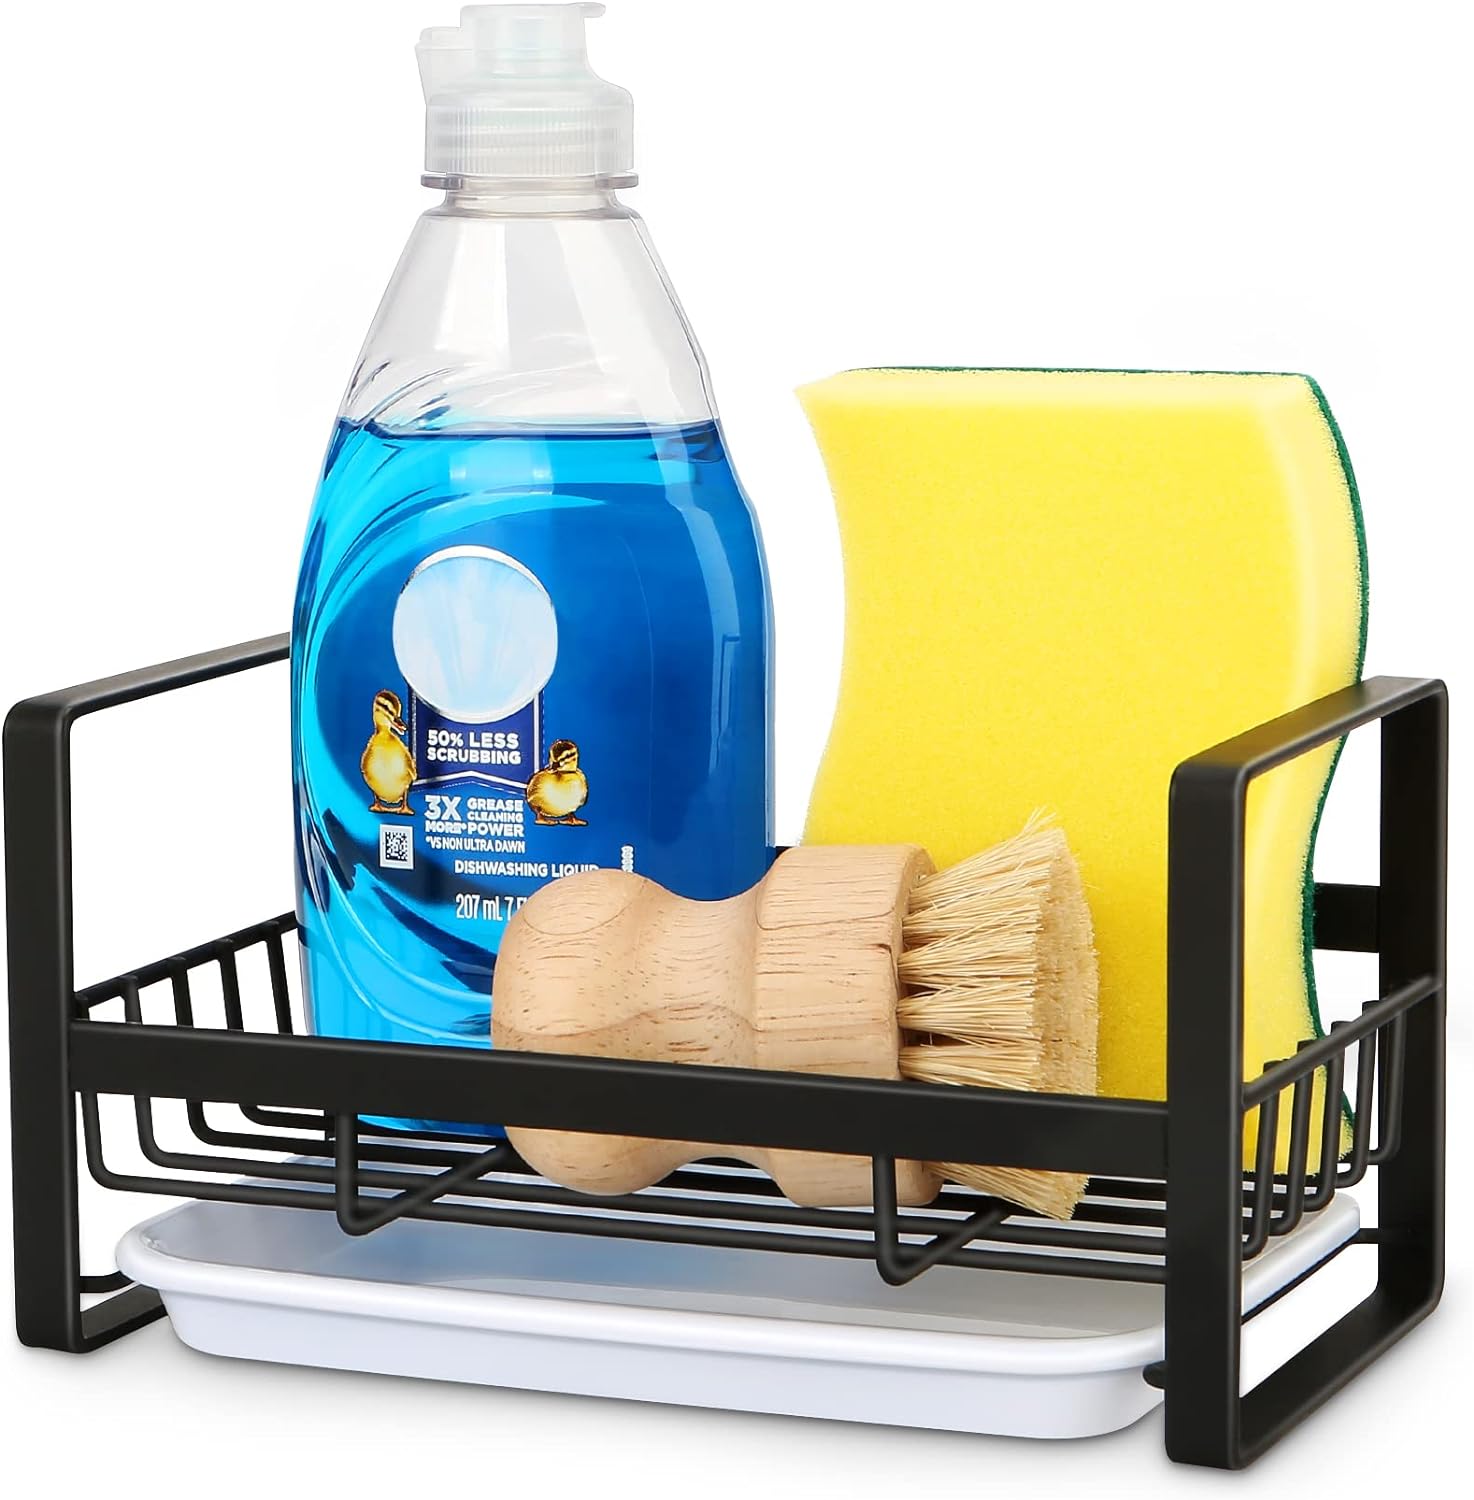 HapiRm Sponge Holder Kitchen Sink Caddy Organizer, Sponge Dish Brush Soap  Dispenser Holder with Drain Tray